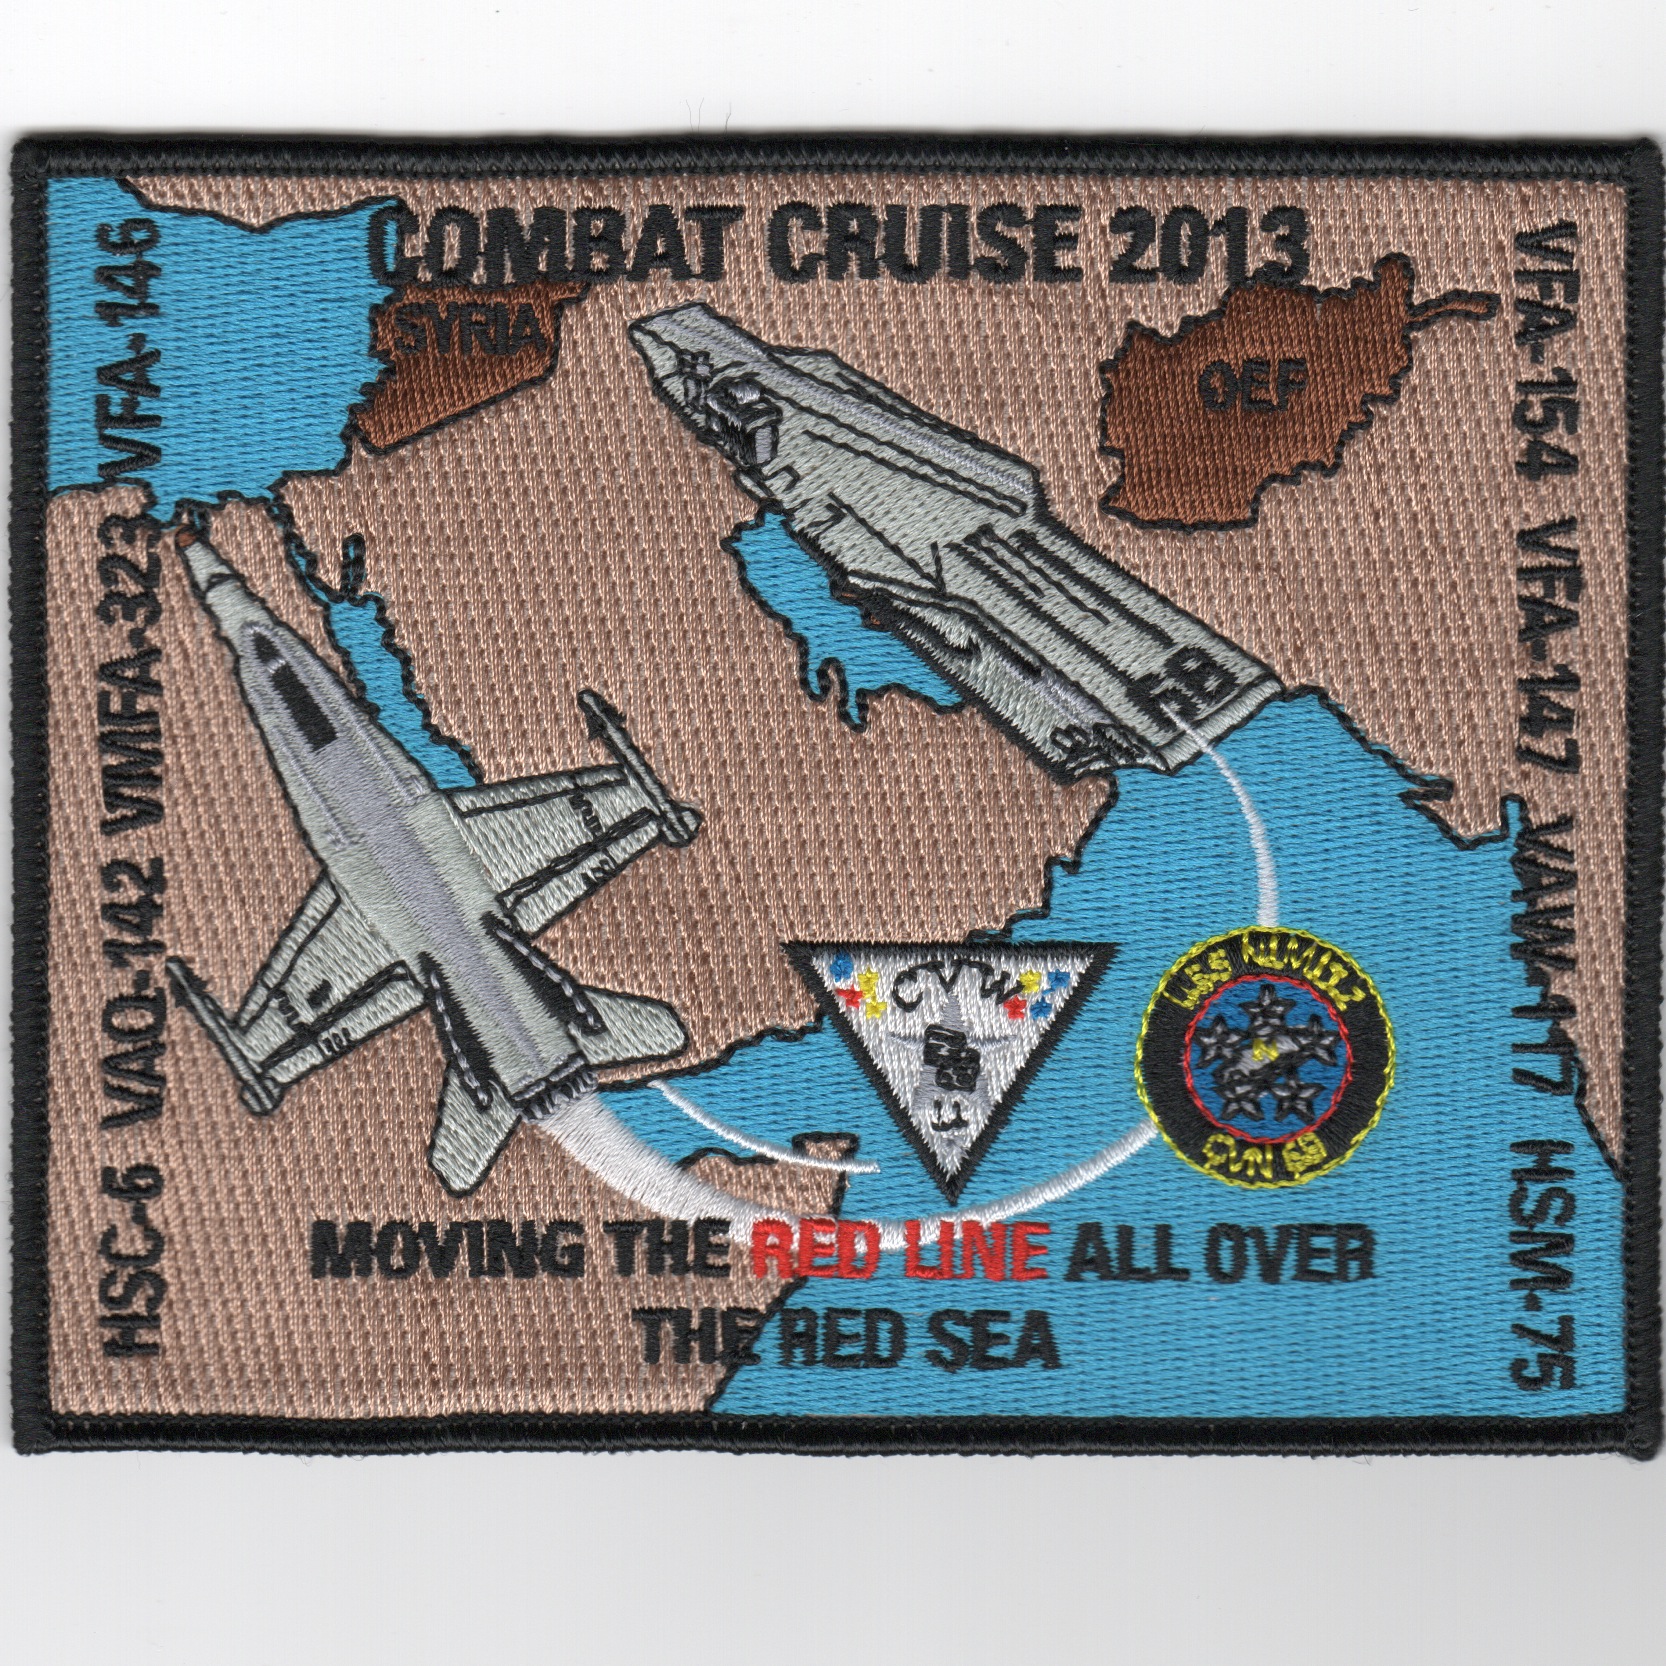 CVN-68/CVW-11 2013 Combat Cruise Patch (Square)